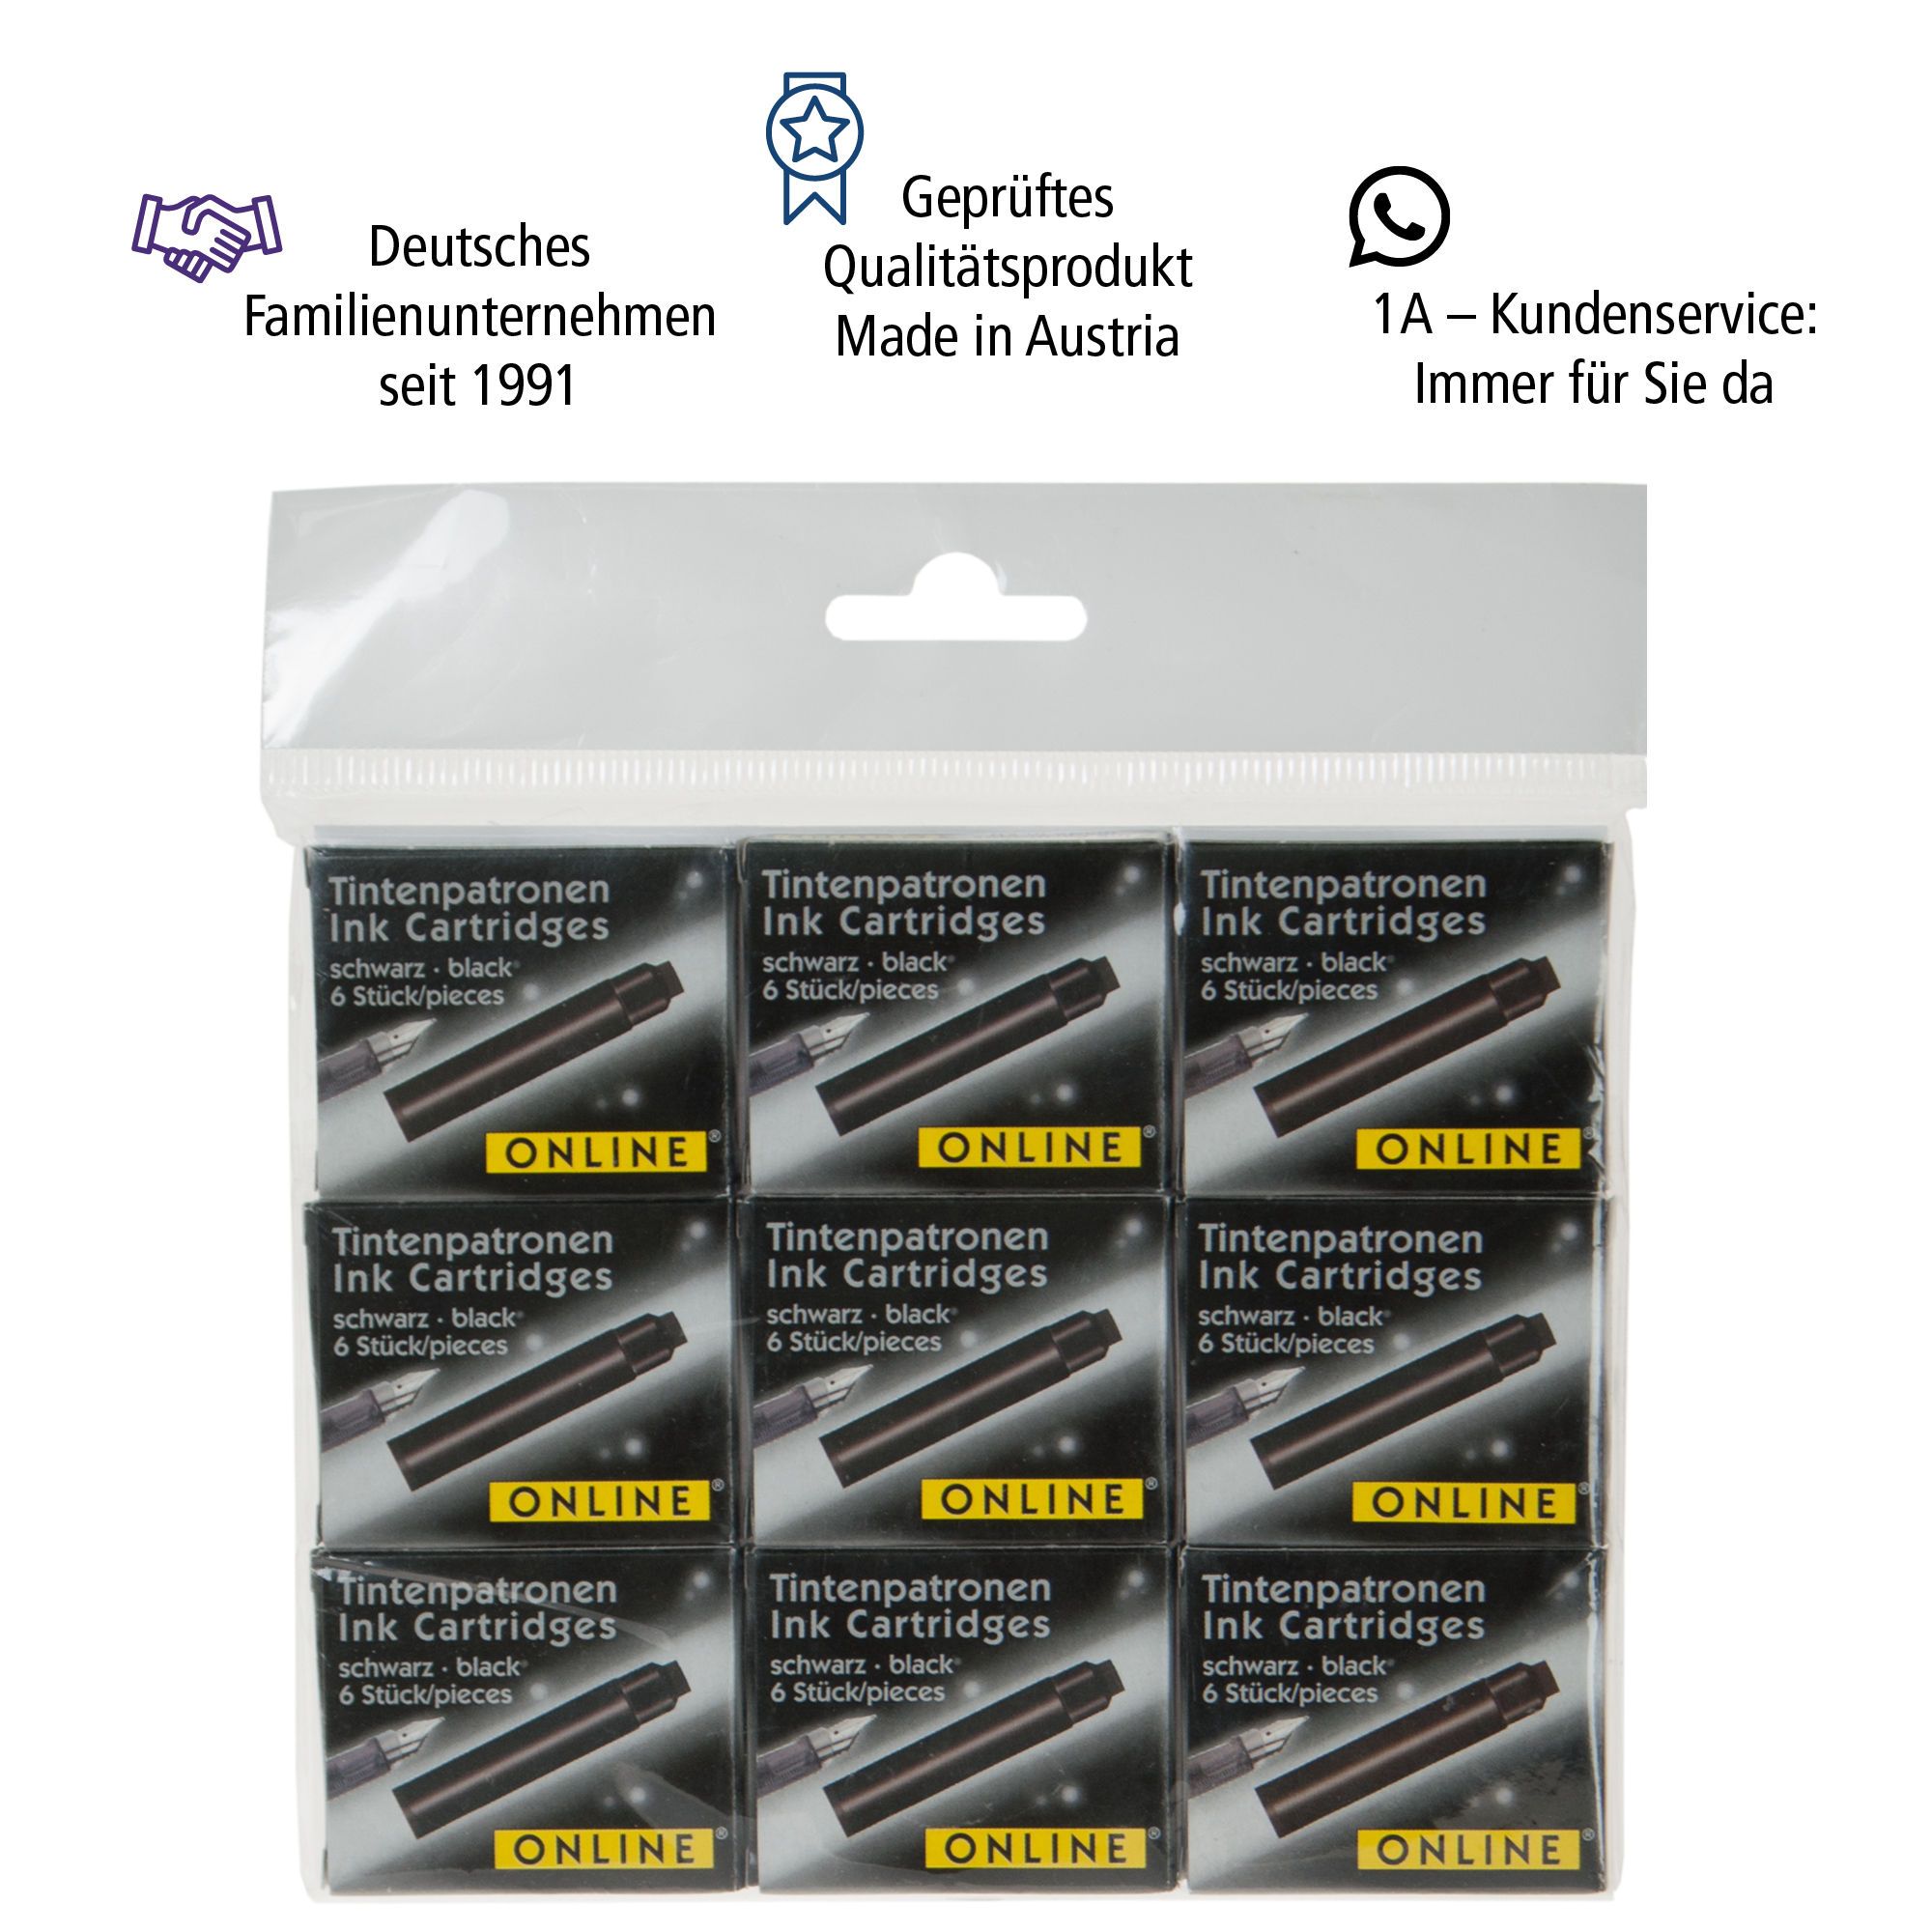 Standard Ink Cartridge in Maxi Package